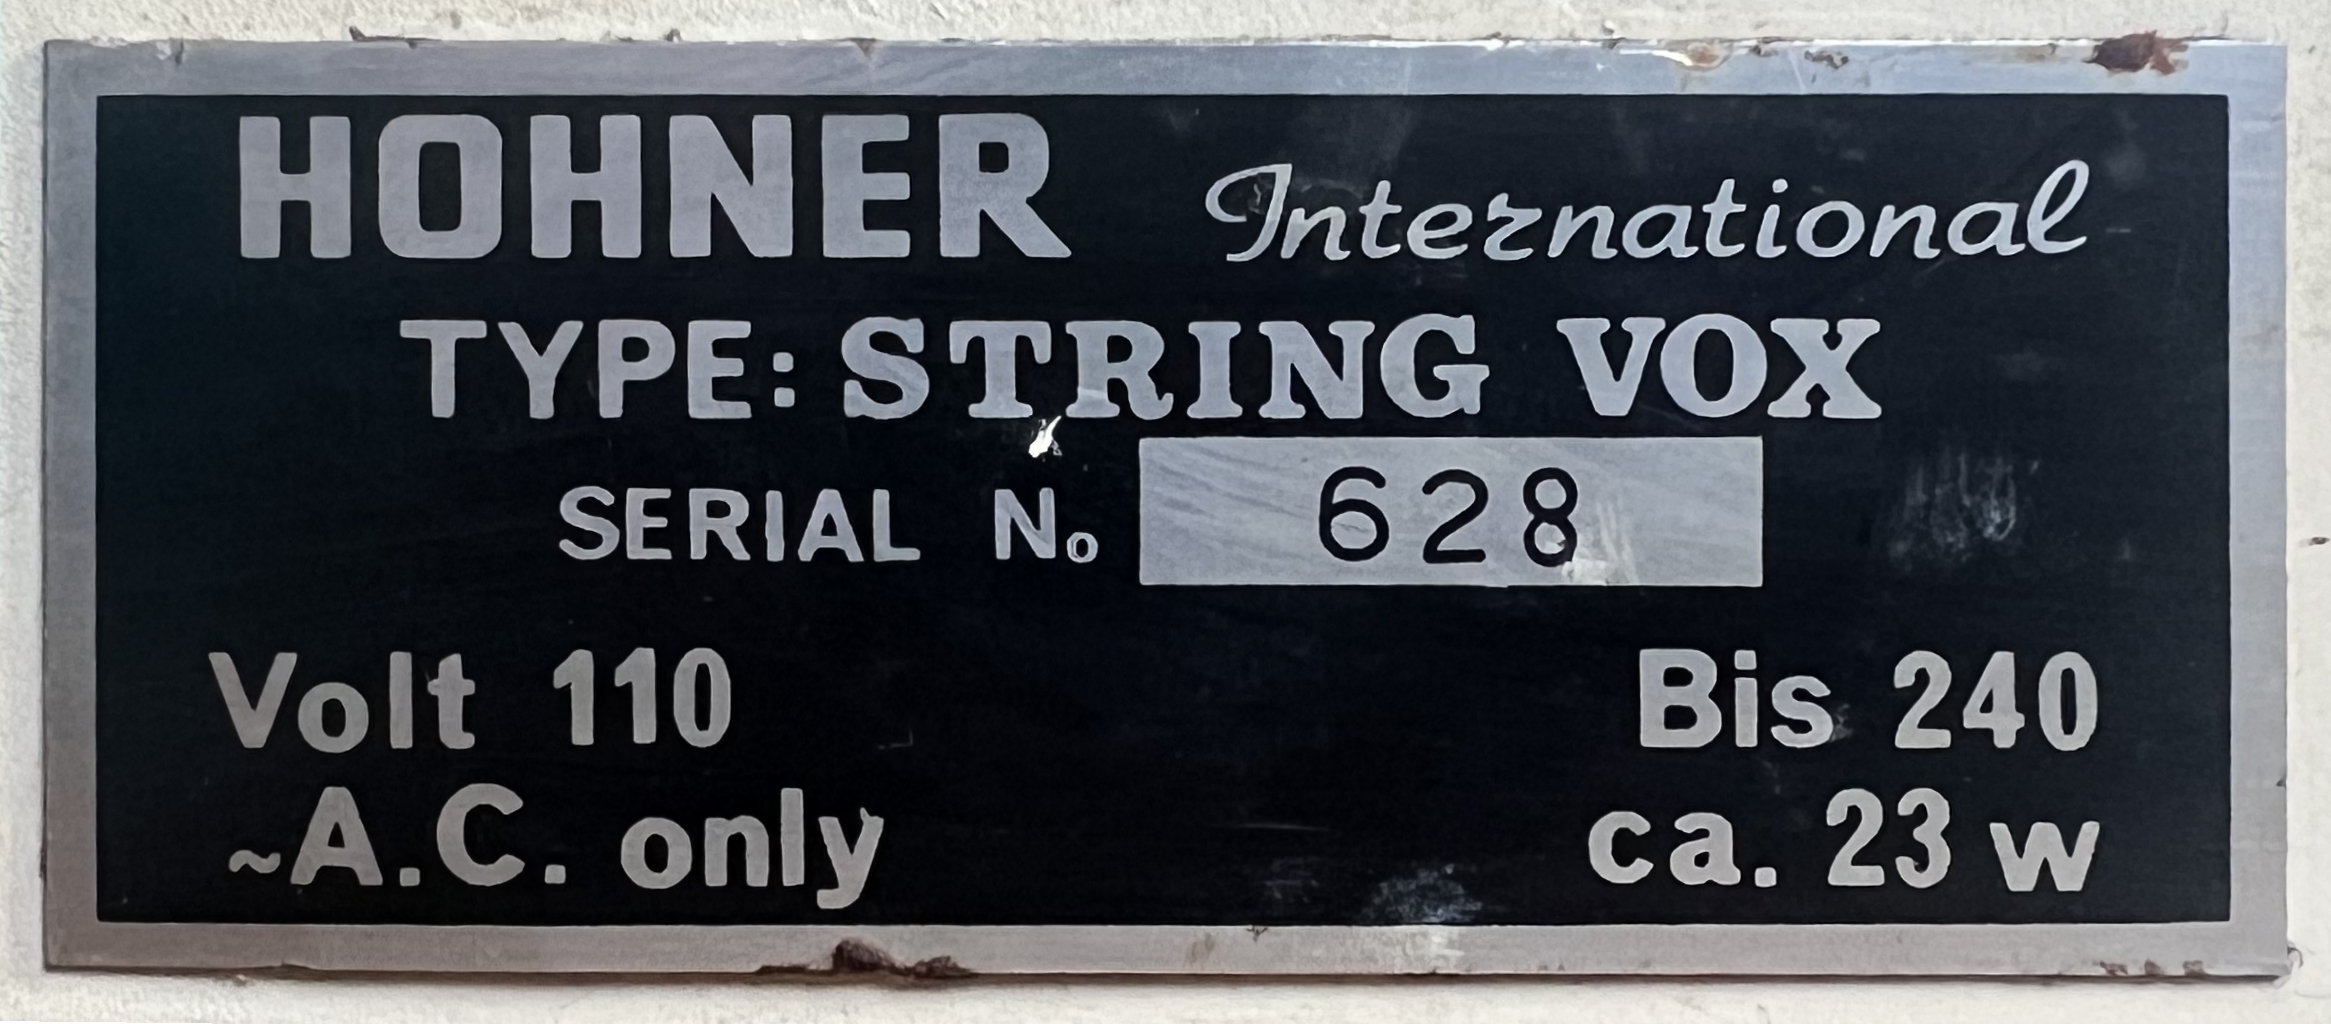 Hohner International String Vox label